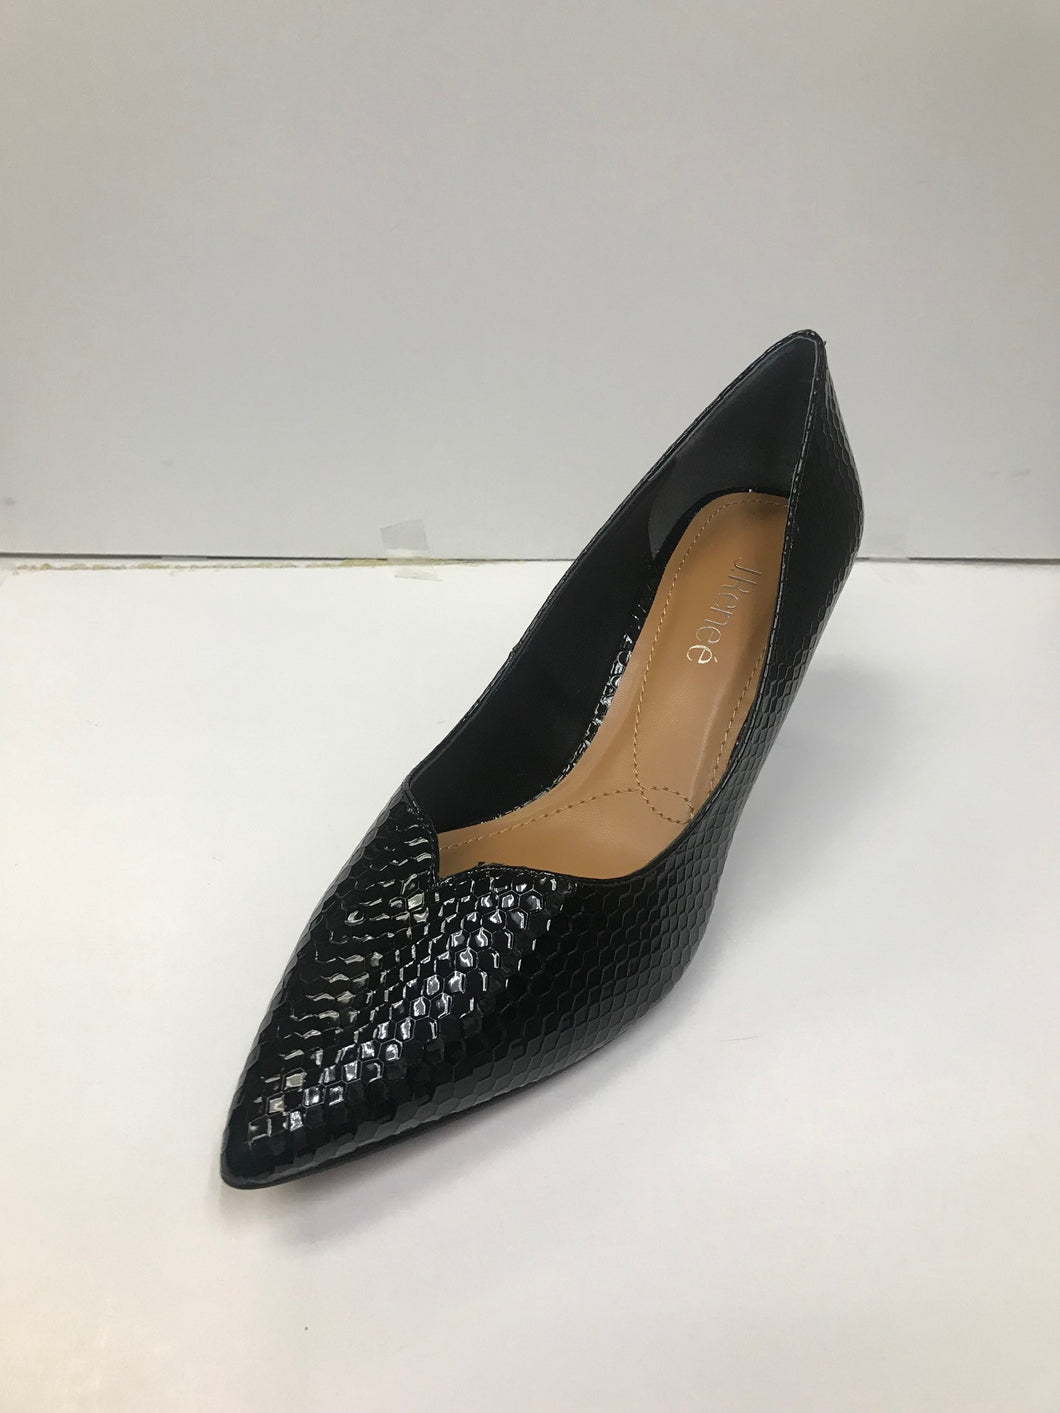 J. Renee Abigaile  Black Snake Skin Shoe 2.25 heel